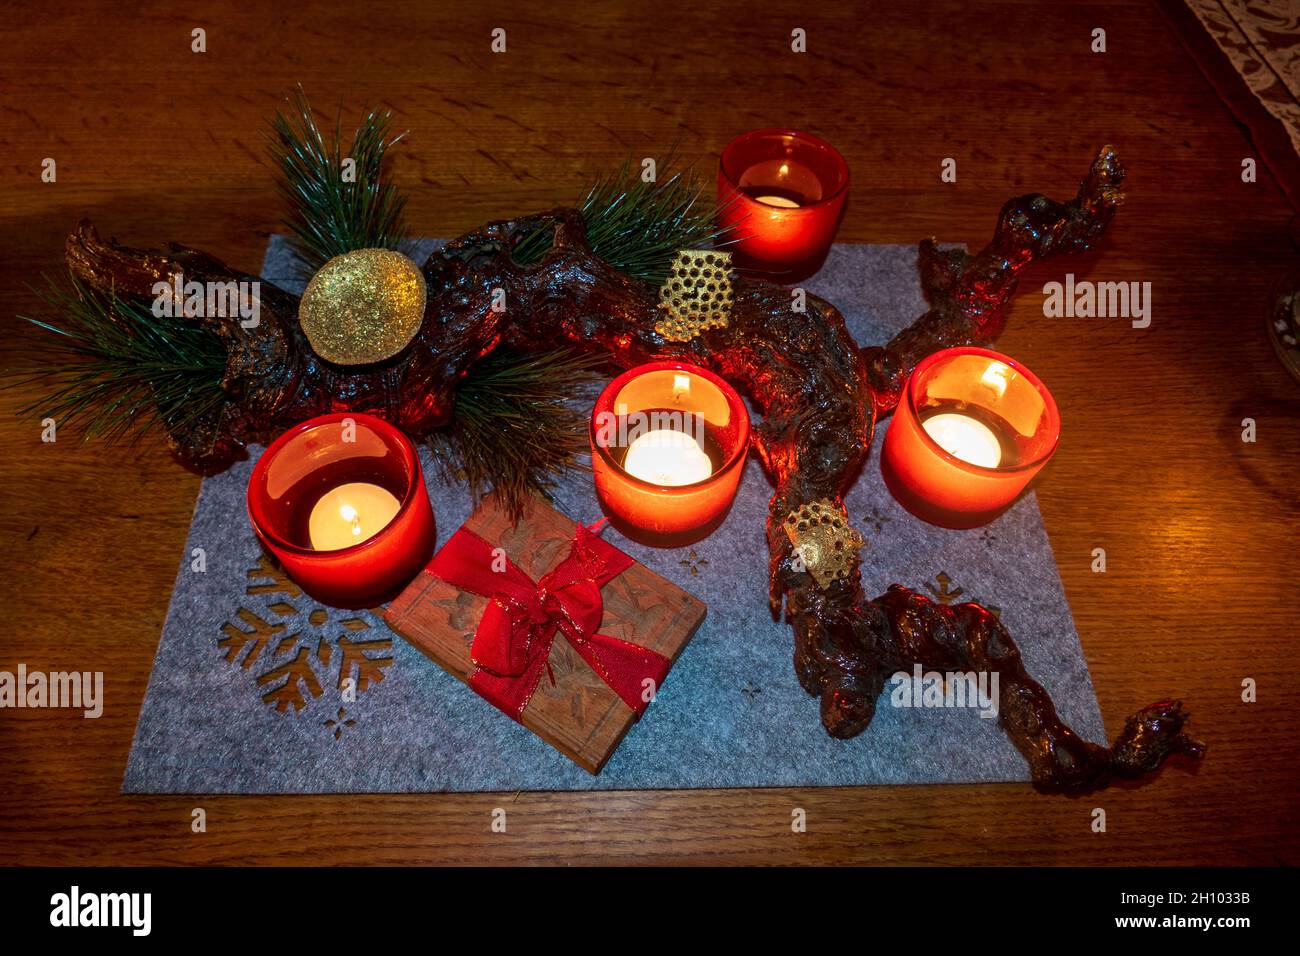 Rebwurzel, Model und Kerzen zum Adventsgesteck dekoriert Foto Stock